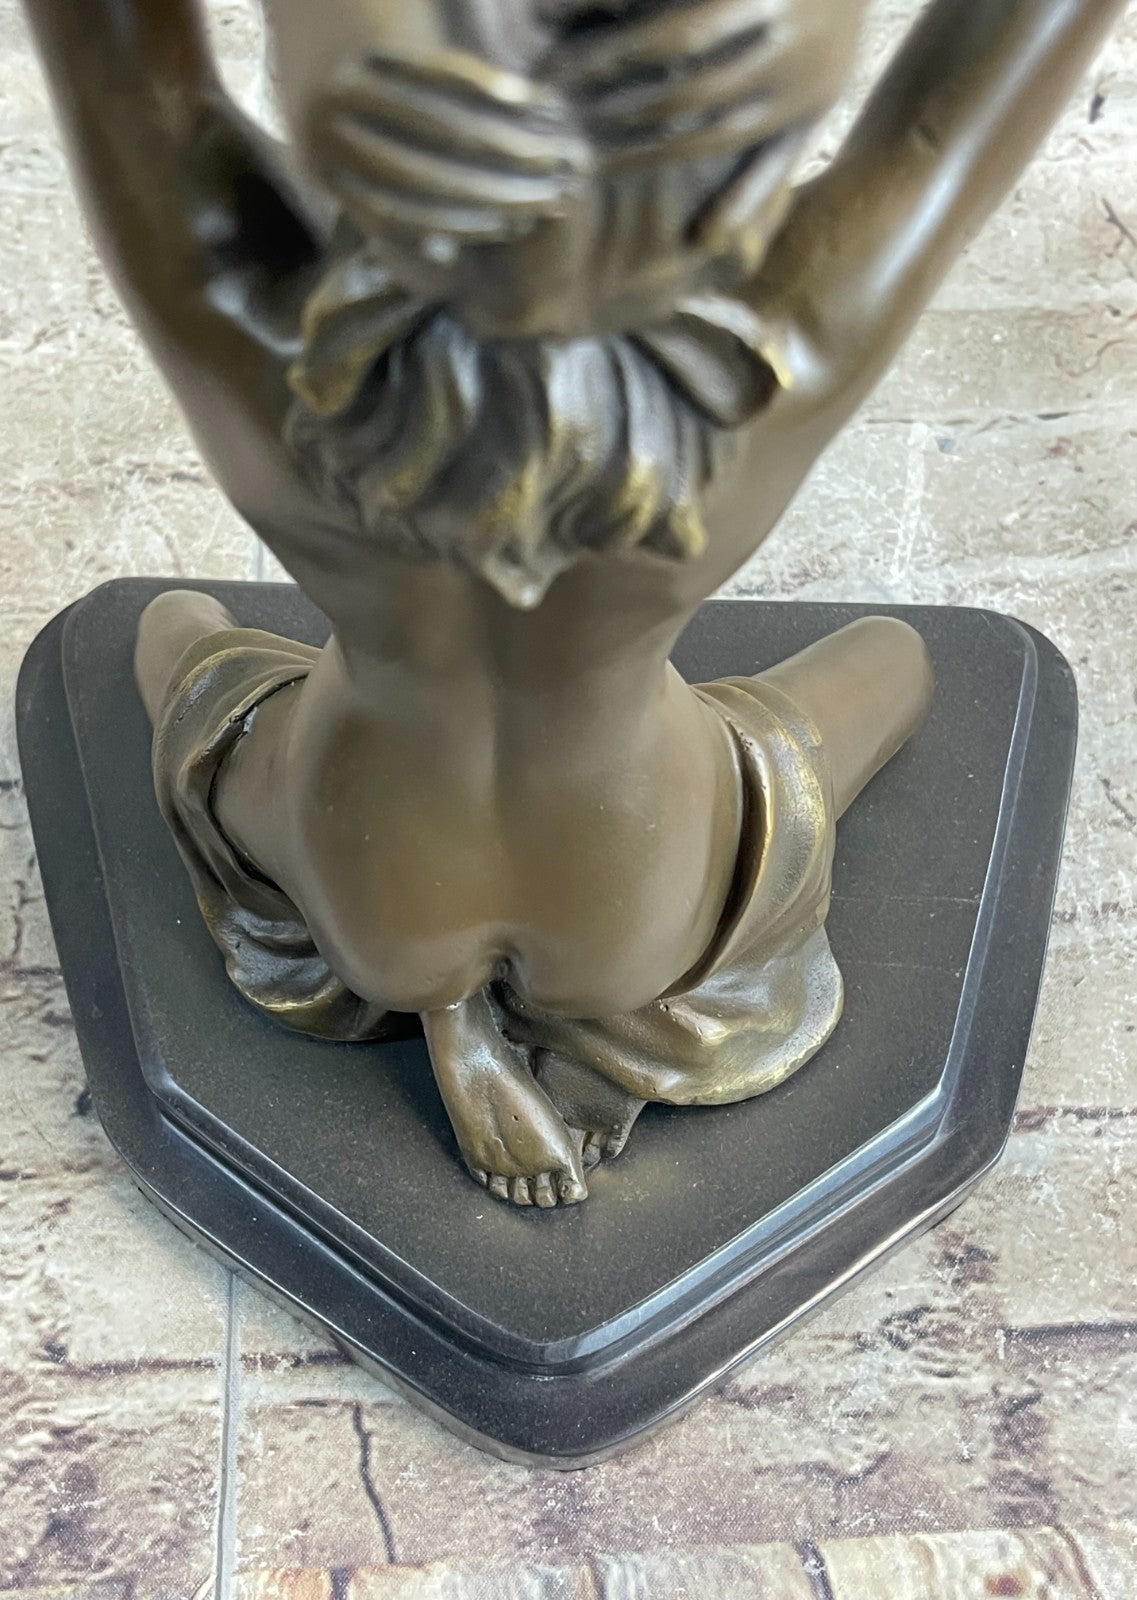 Abstract Modern Art Nude Girl Captive Bronze Sculpture Marble Base Statue Figure